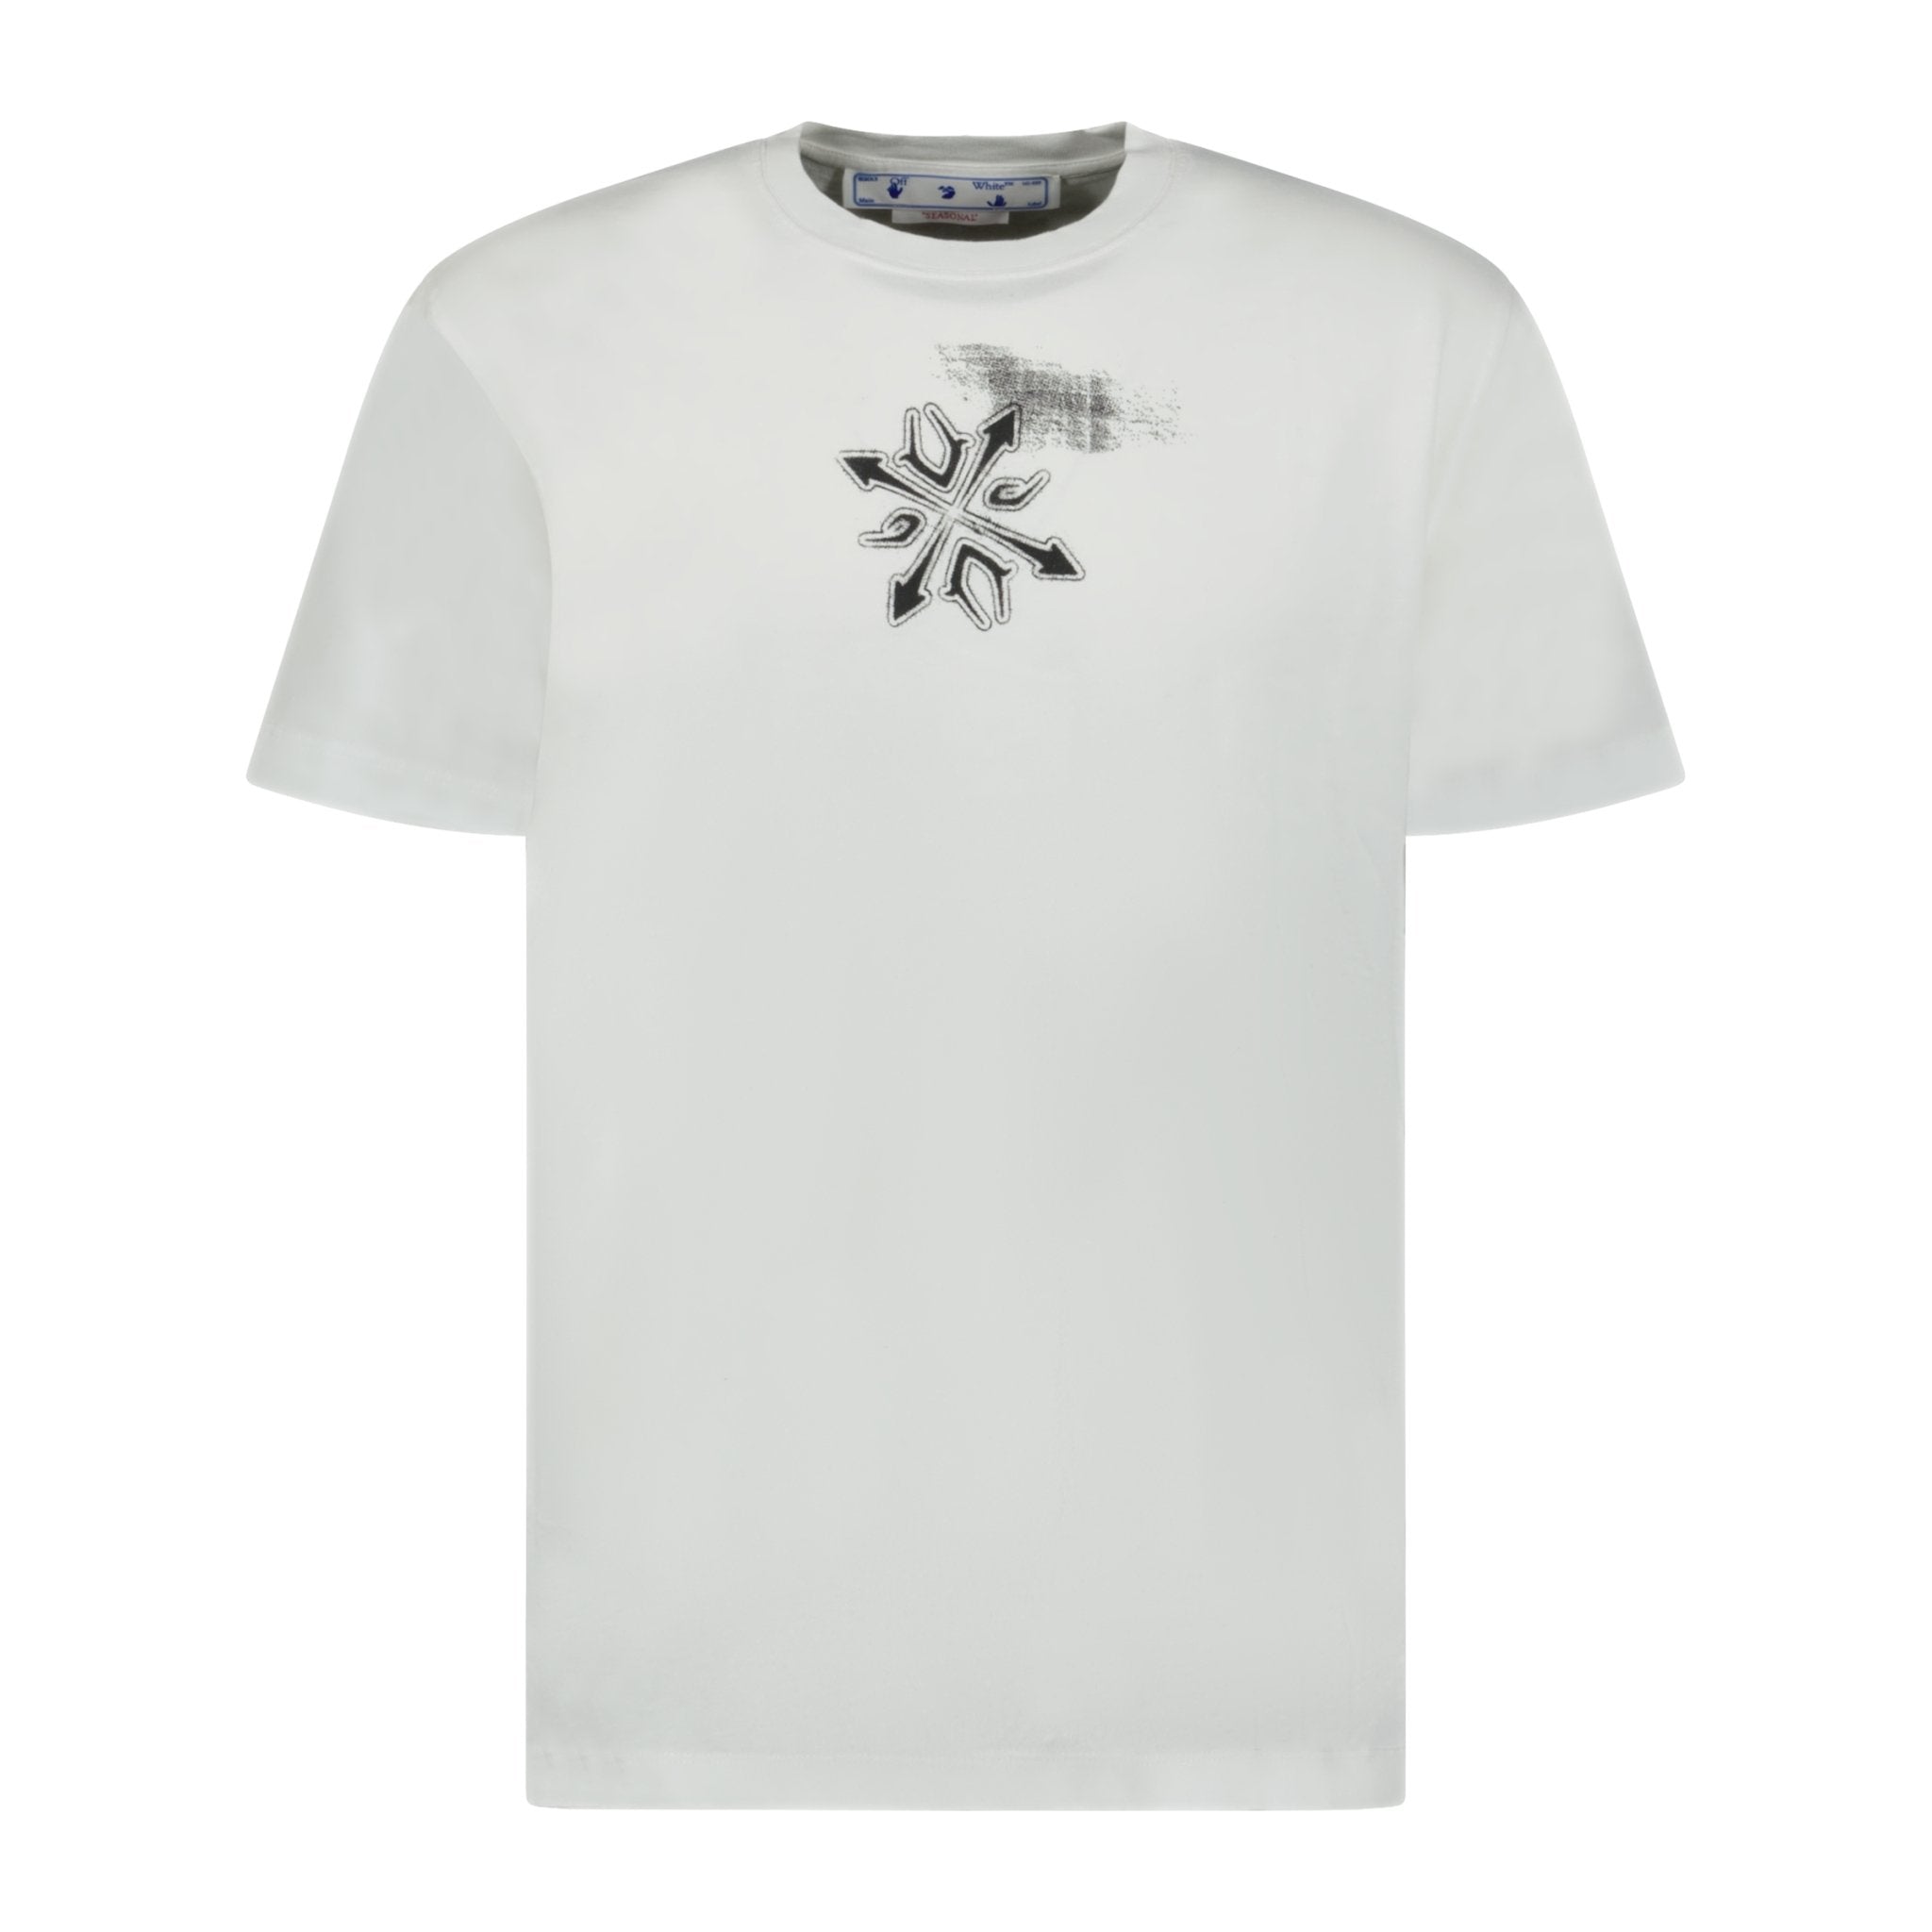 Off-White Wave Diagonal Logo T-Shirt Black, Boinclo ltd